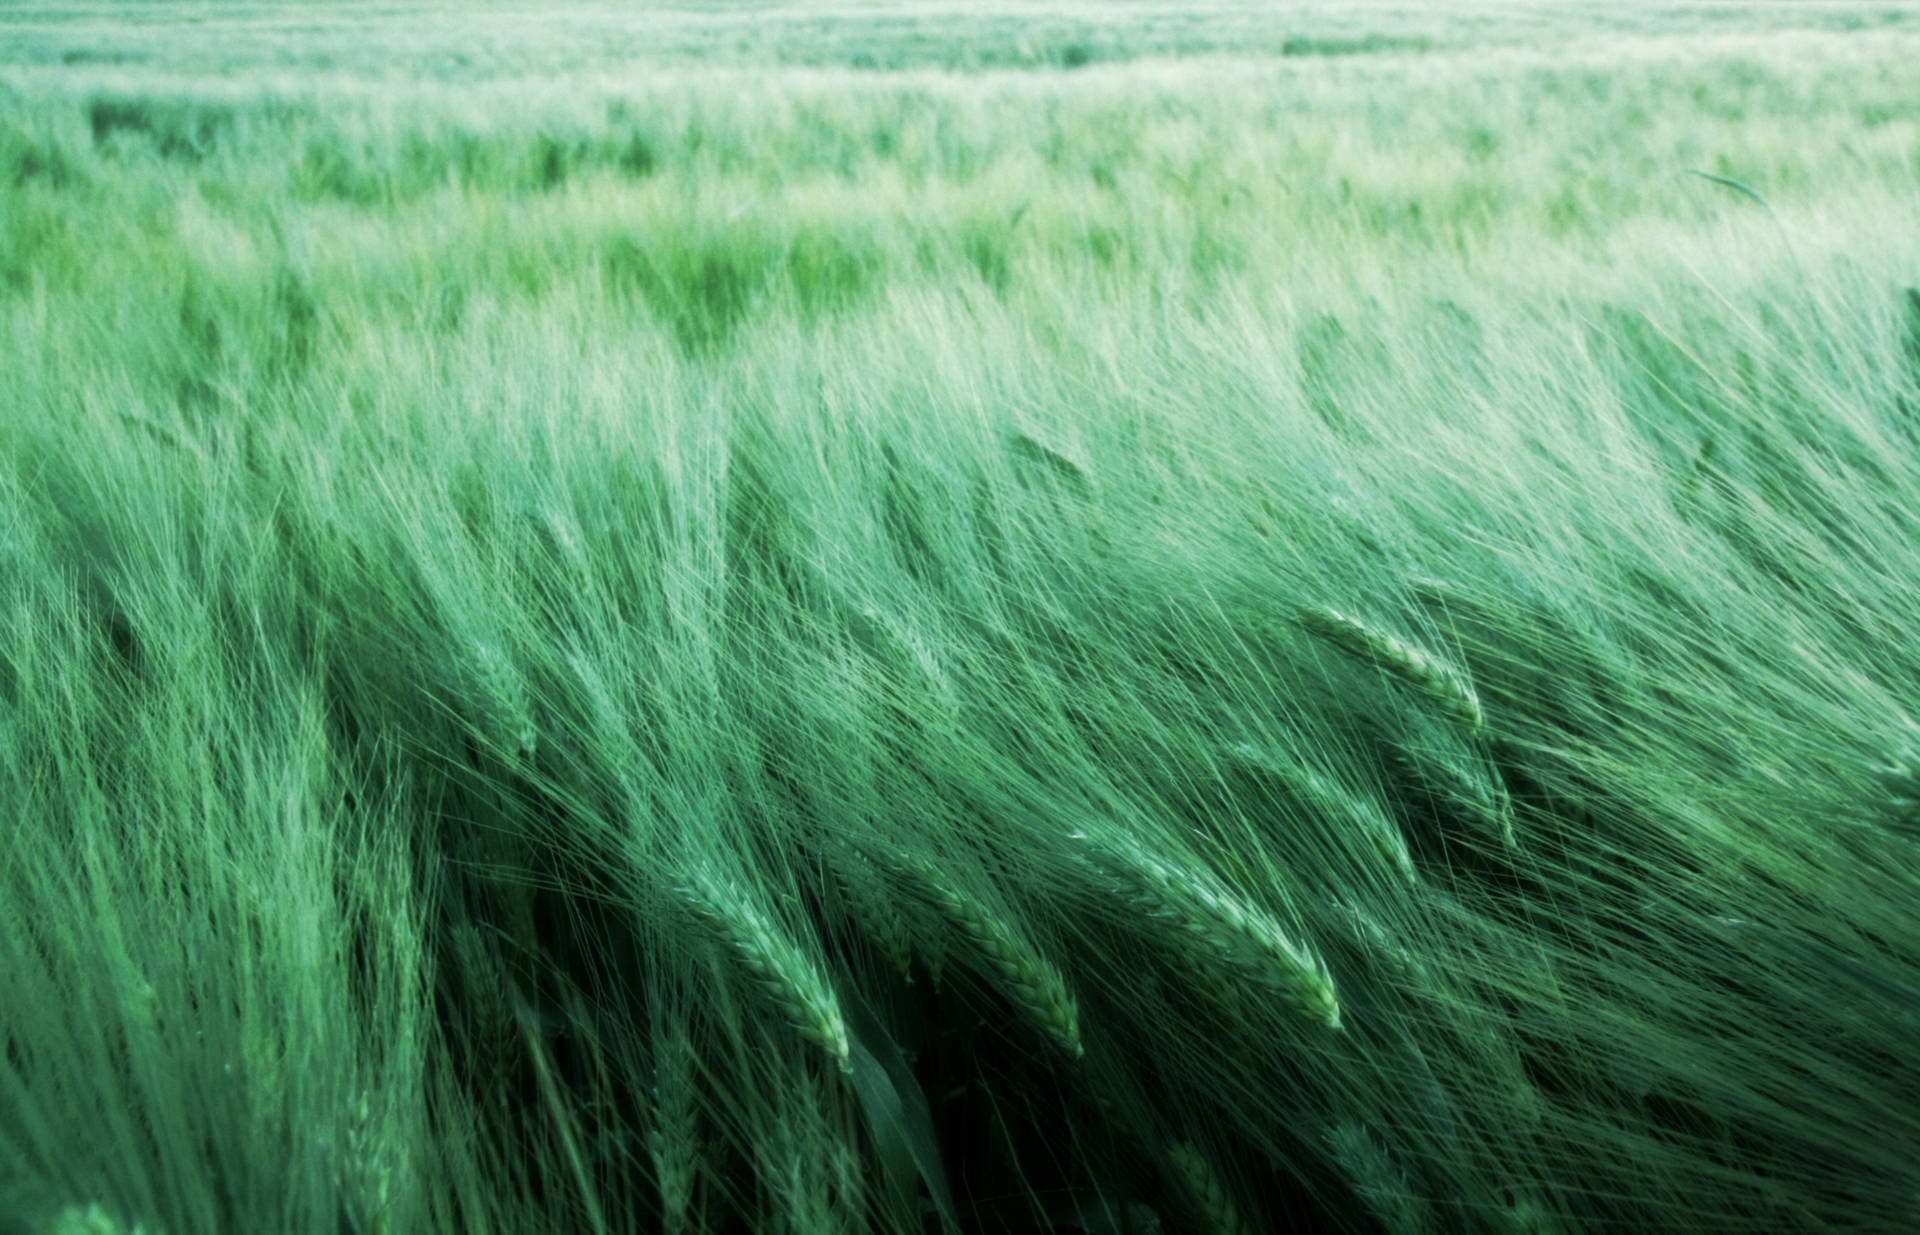 Fuzzy Green Wheat Field Swaying With Wind Wallpaper